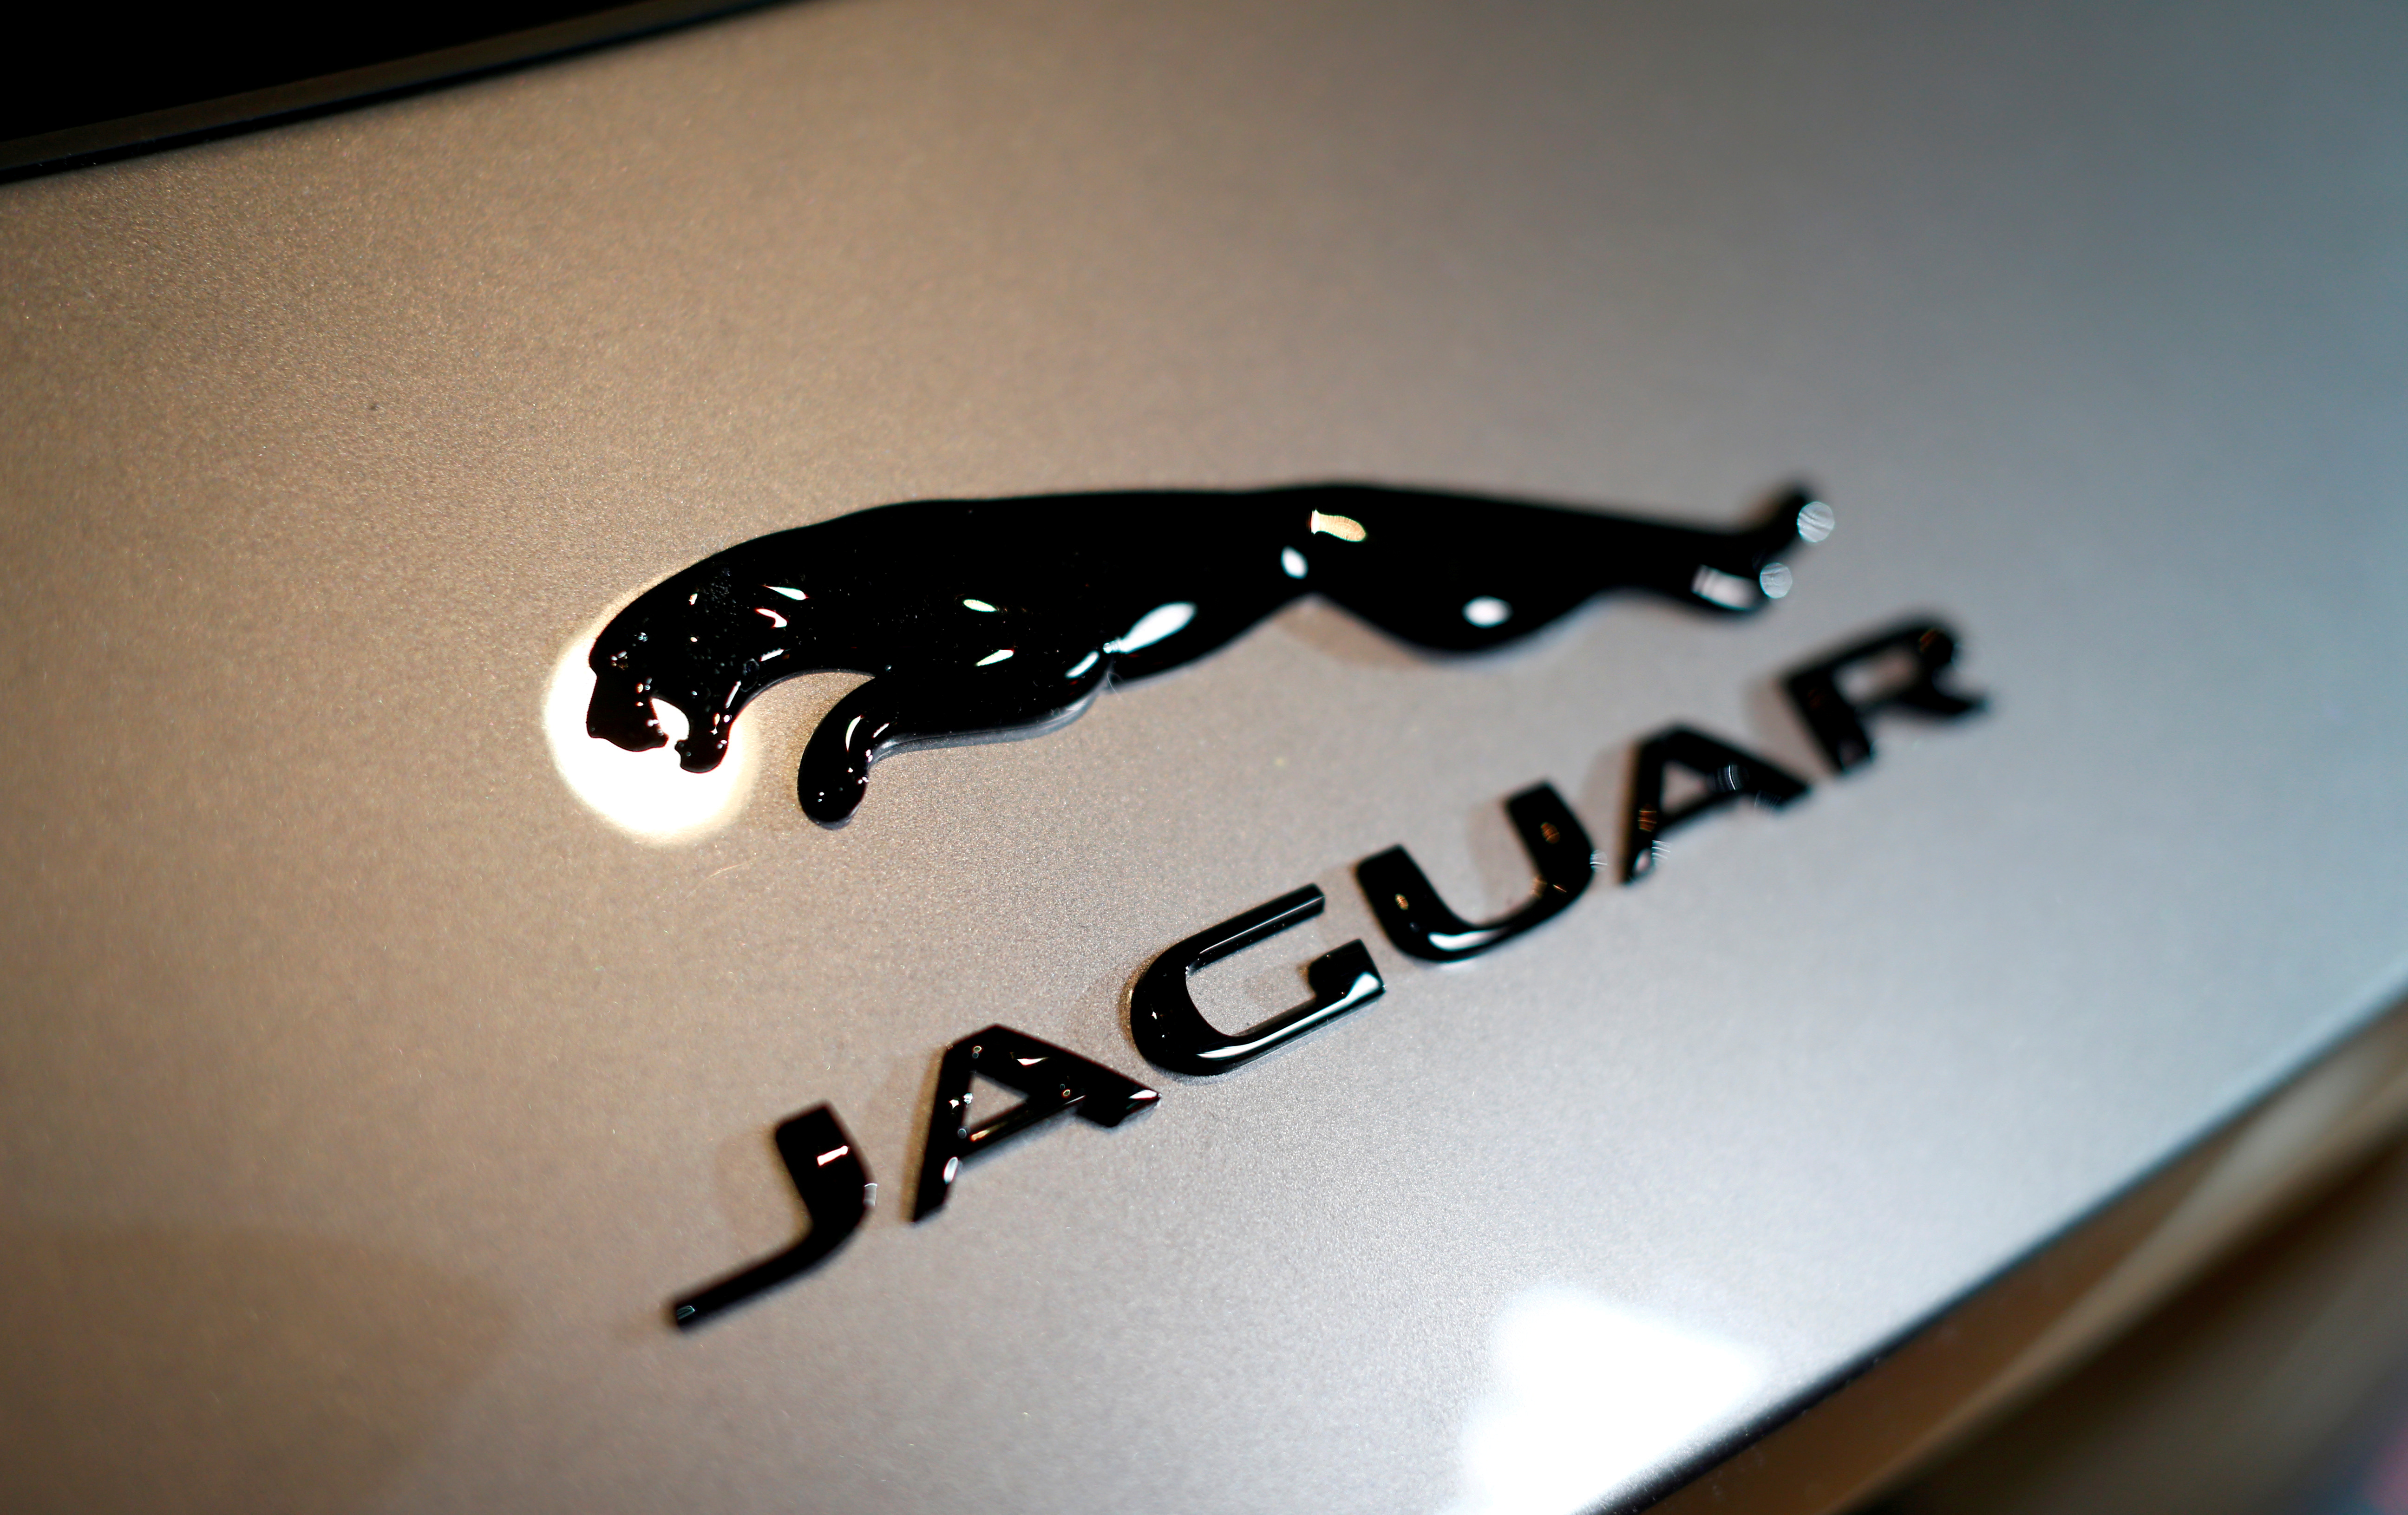 Jaguar Land Rover unveils the new Jaguar F-Type model during its world premiere in Munich, Germany, December 2, 2019. REUTERS/Michaela Rehle